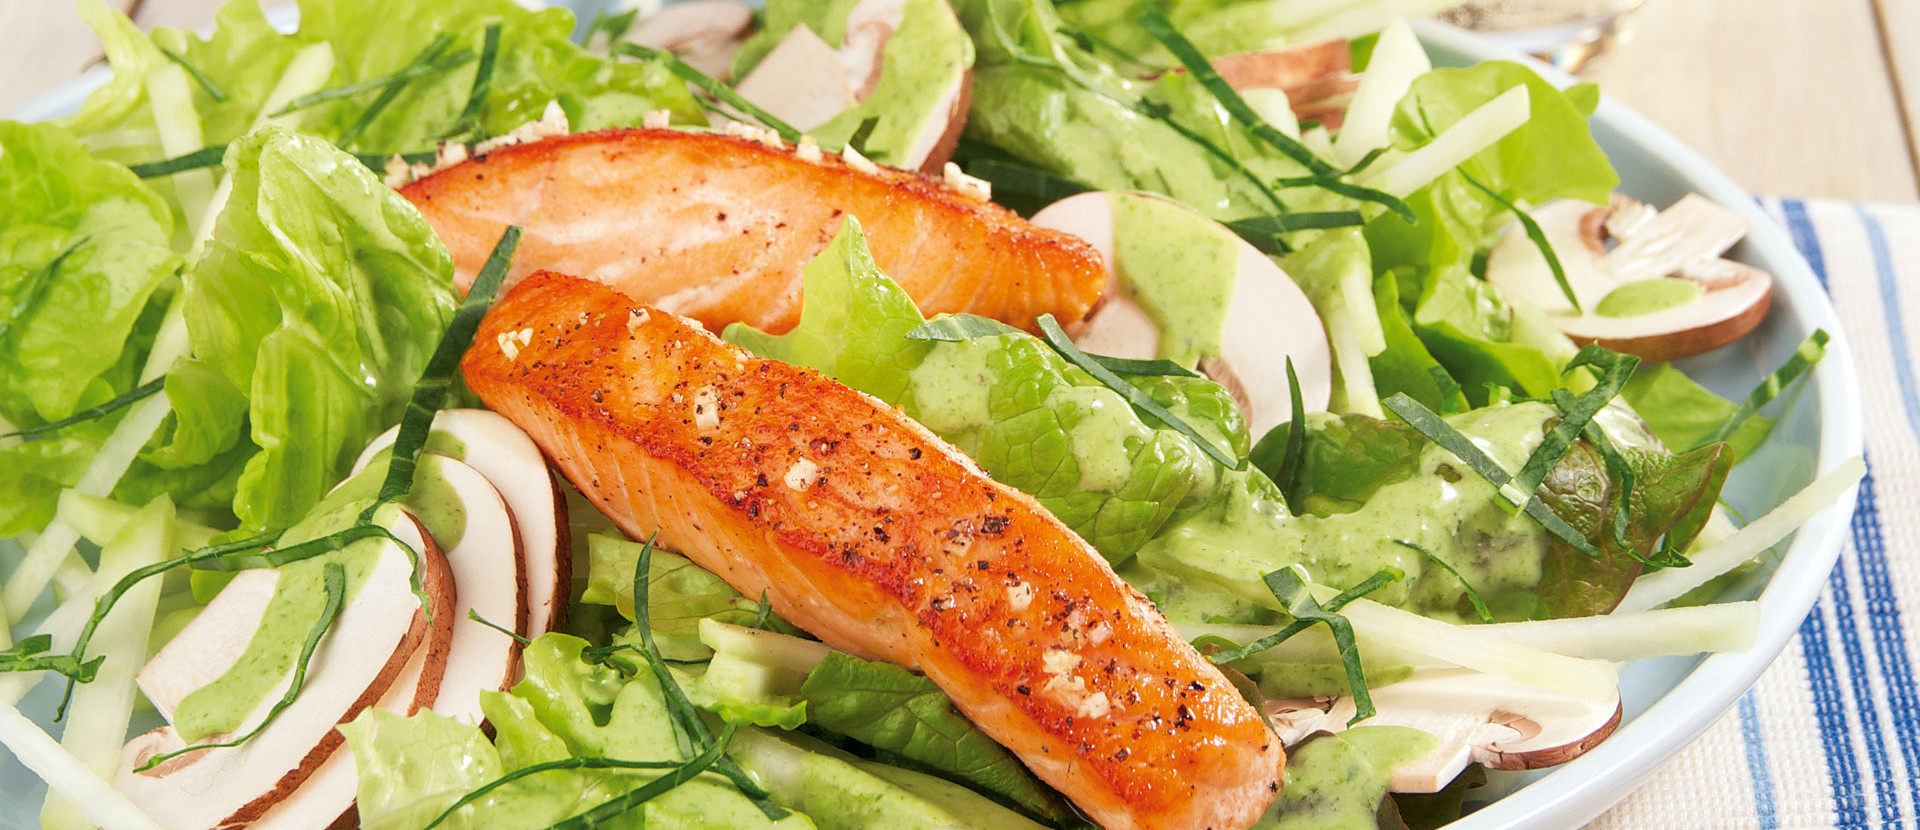 Bio-Salat mit Lachs und Champignons Rezept | tegut...